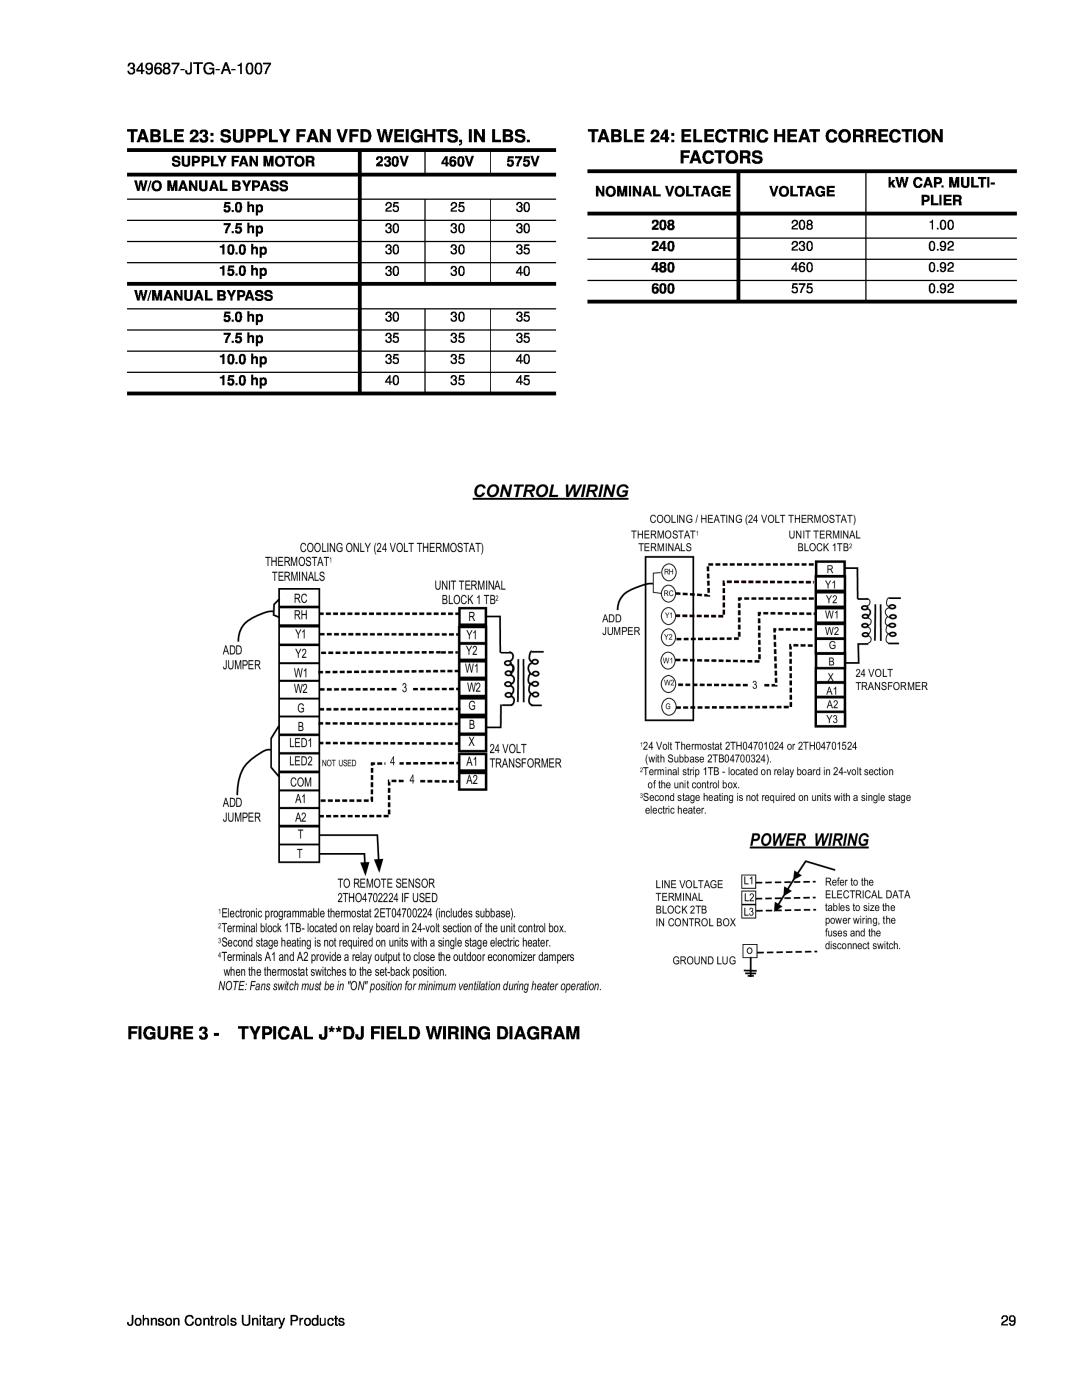 Johnson Controls J15 Supply Fan Vfd Weights, In Lbs, Electric Heat Correction Factors, Typical J**Dj Field Wiring Diagram 